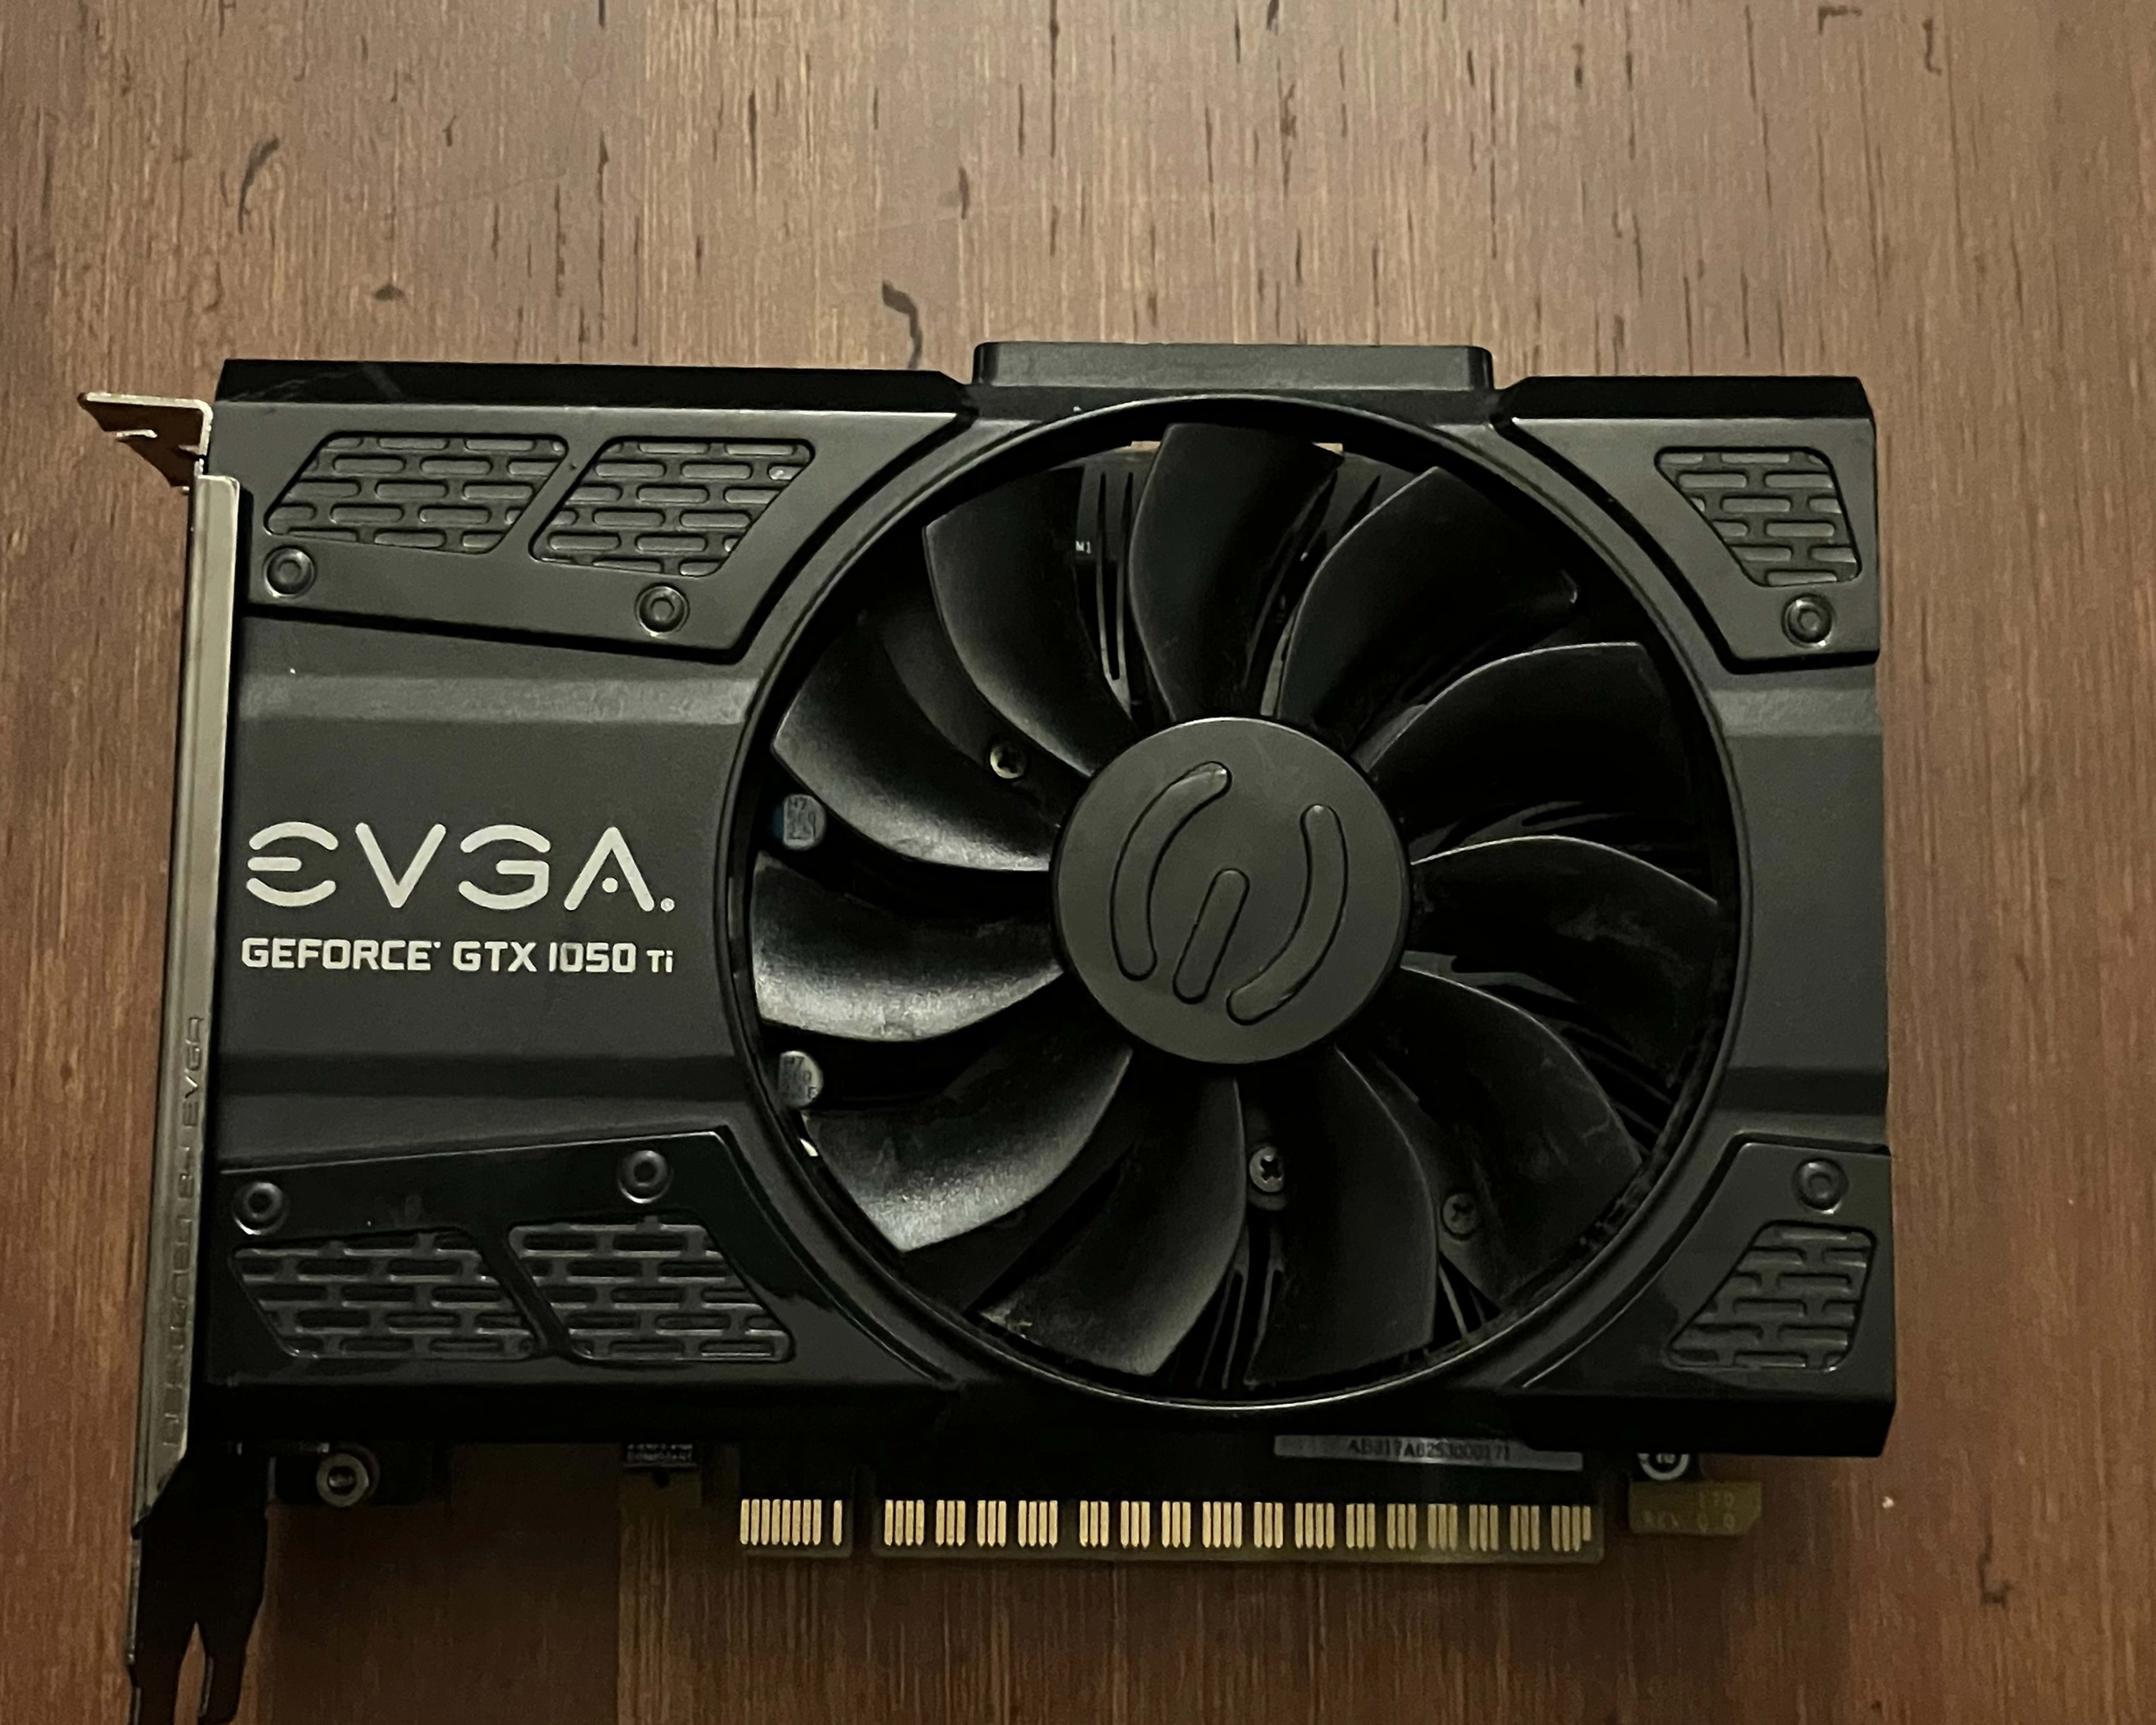 EVGA Geforce GTX 1050 TI Graphics Card